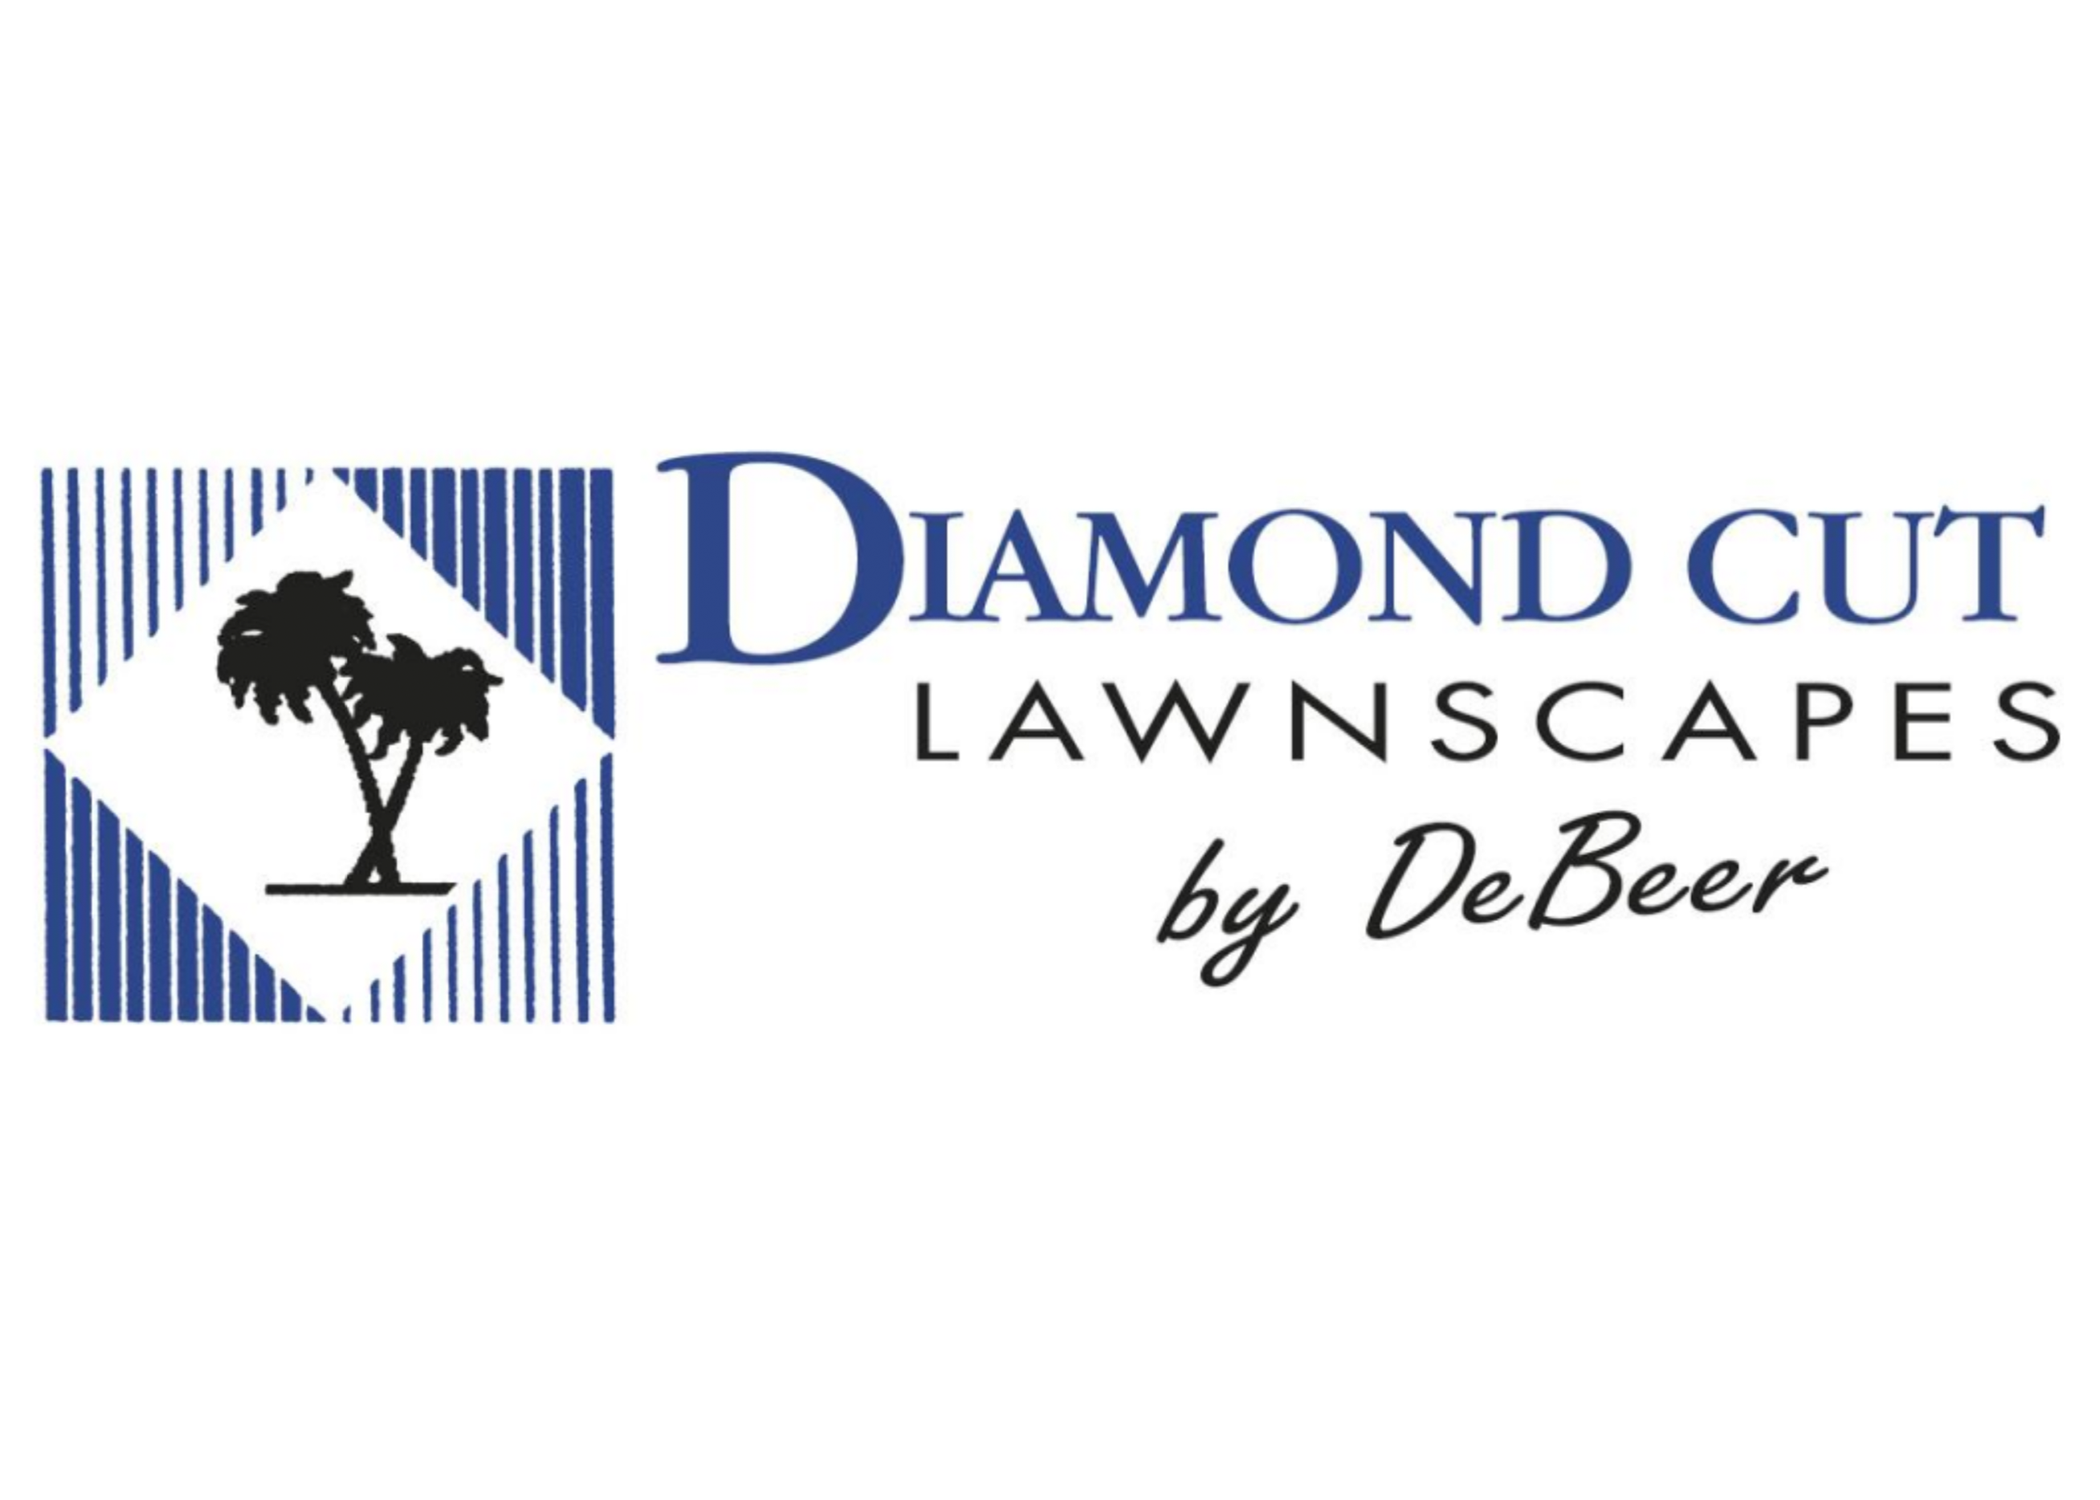 Dimond City LawnScapers